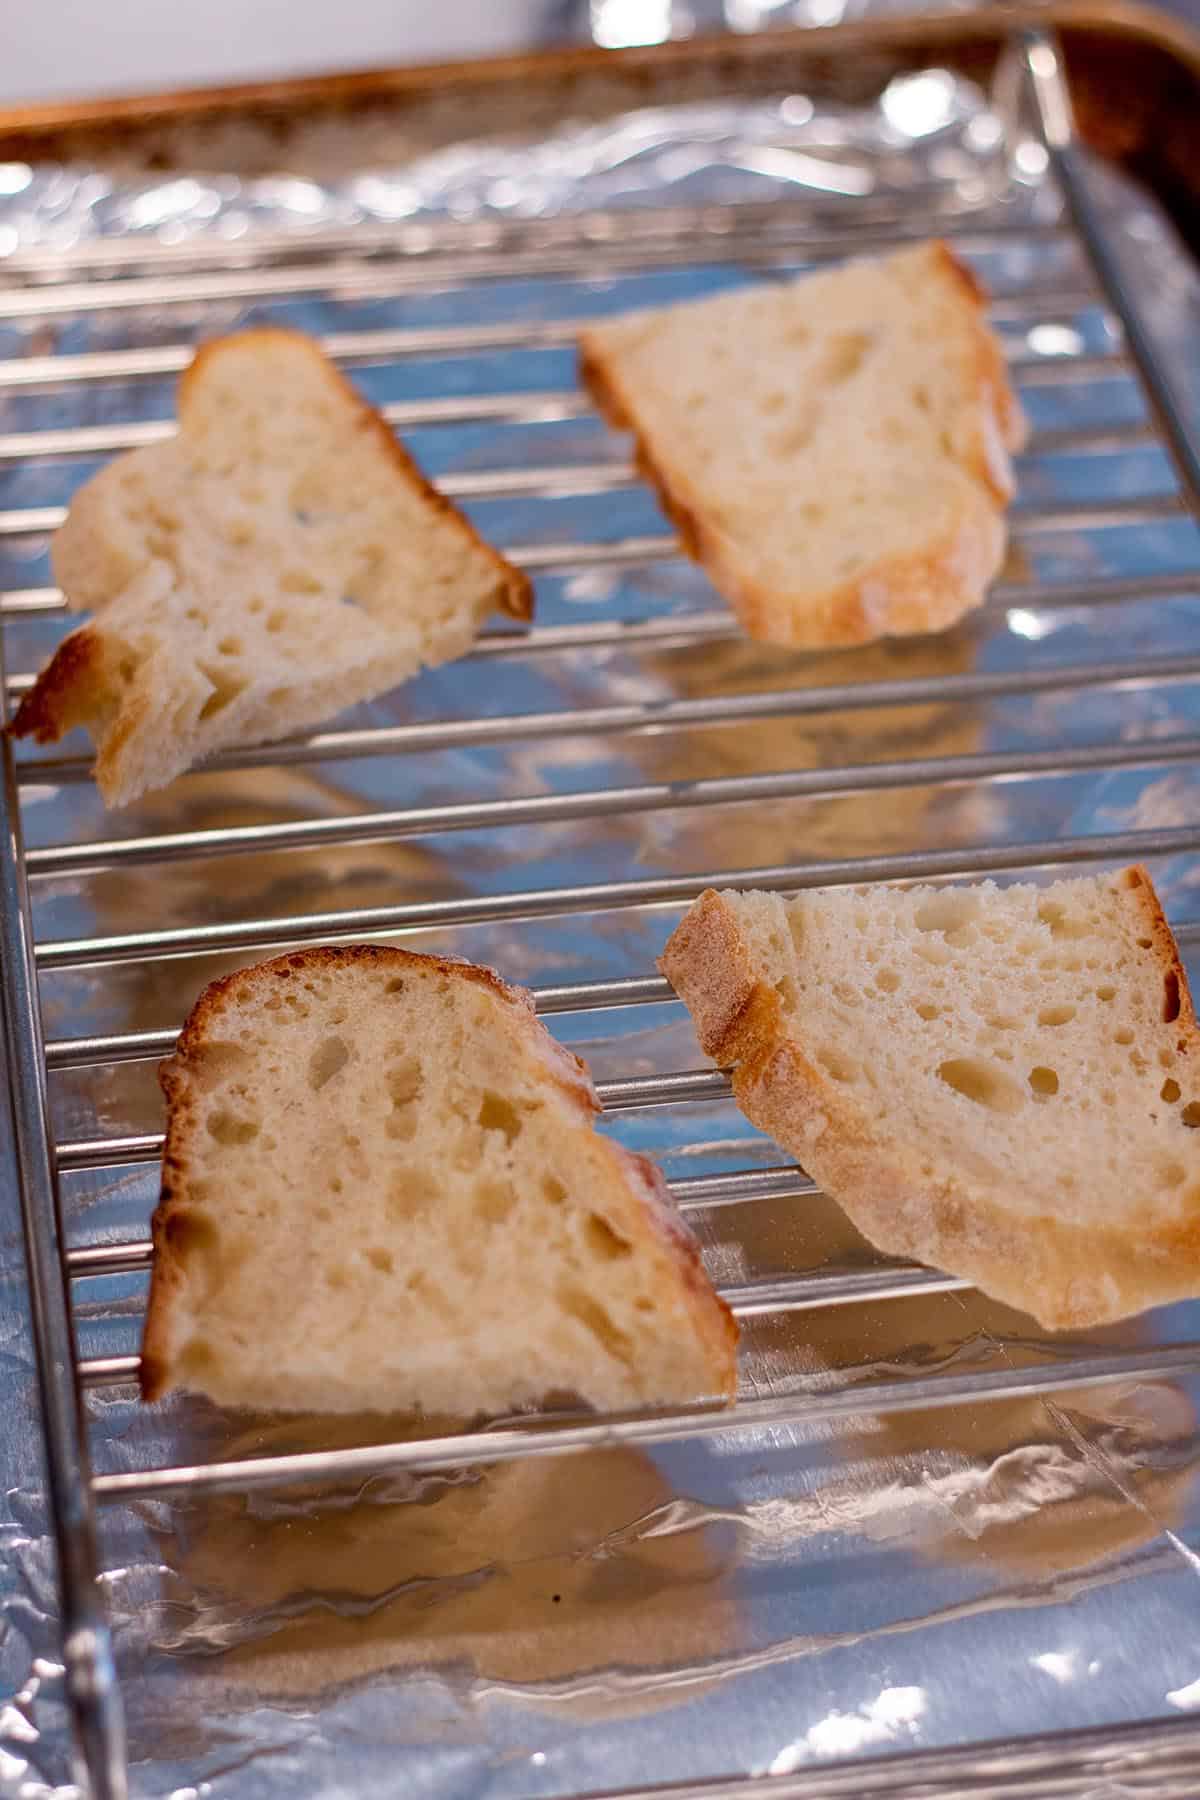 4 slices of sourdough bread on a oven safe rack. 